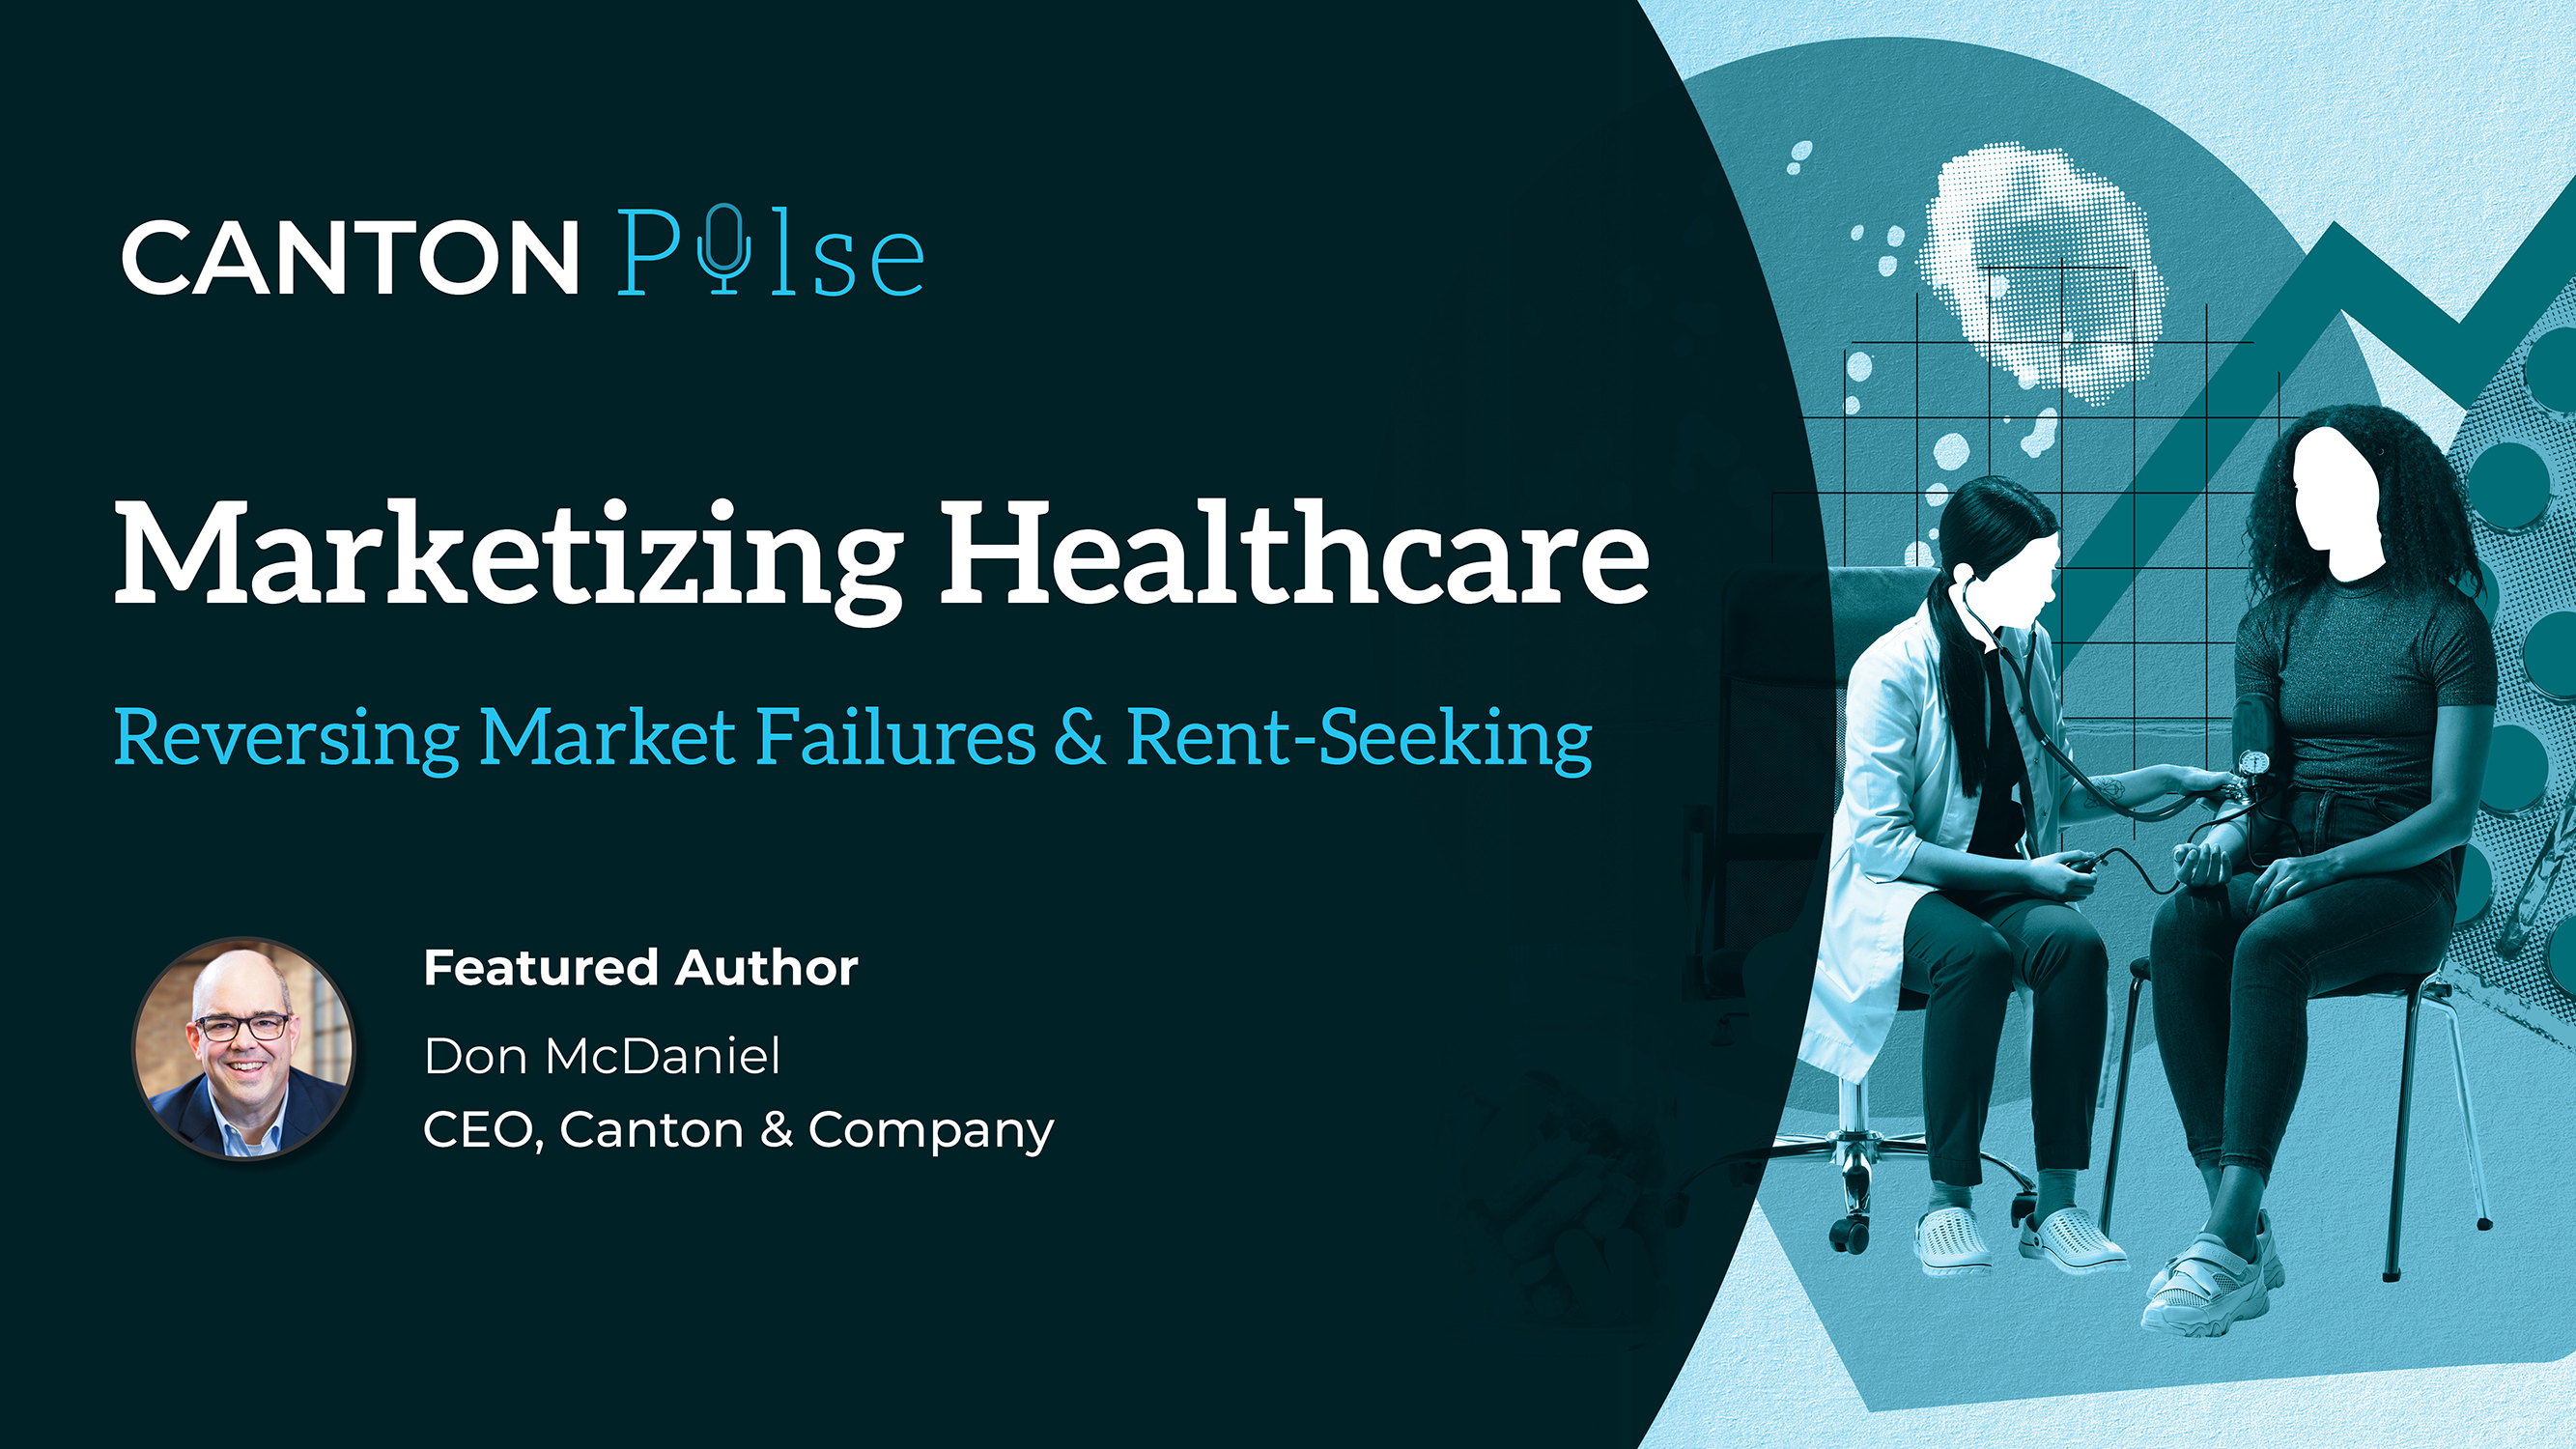 Marketizing Healthcare: Reversing Market Failures & Rent-Seeking